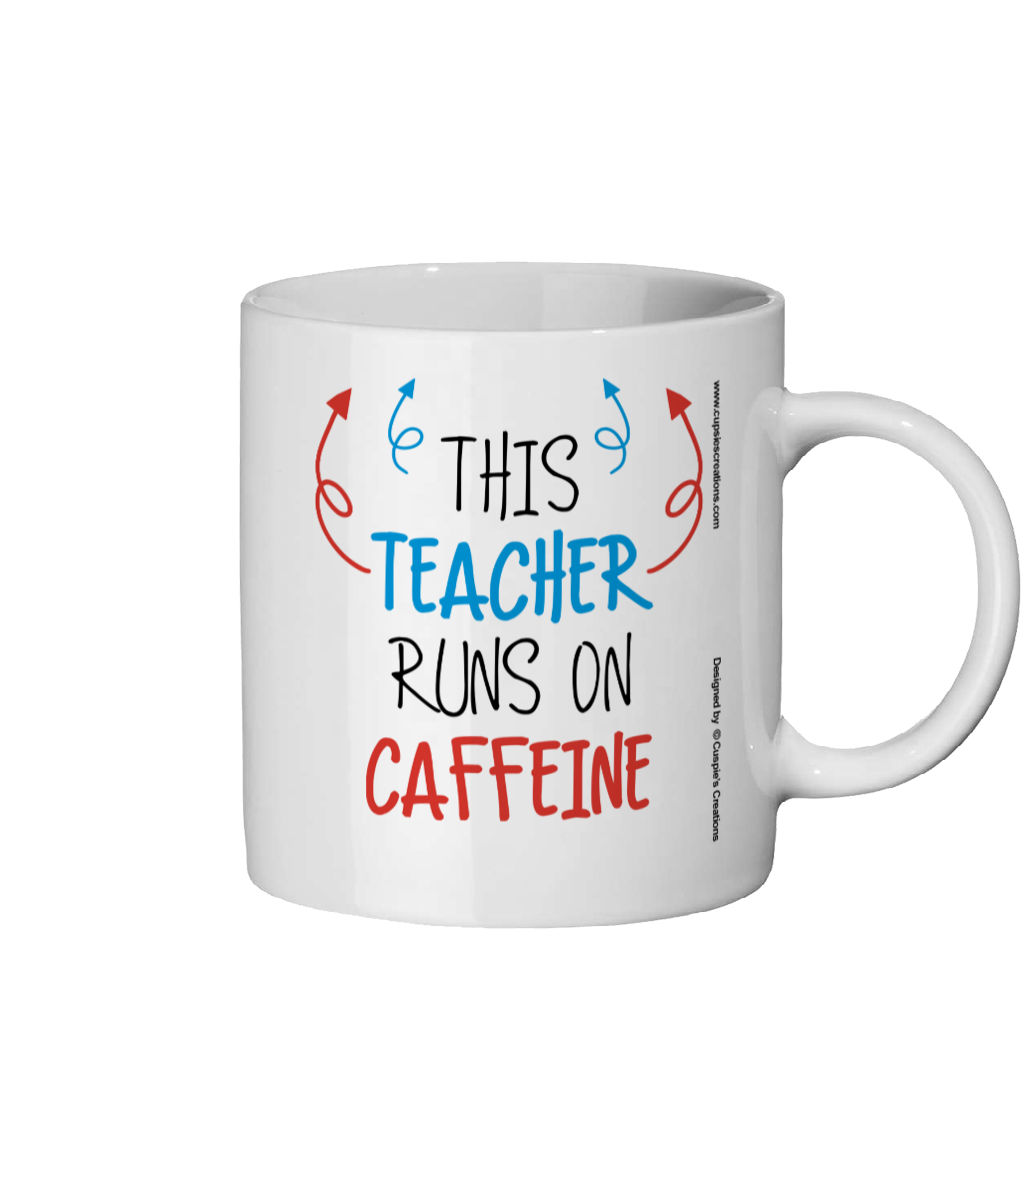 Funny Teacher Mug which reads "this teacher runs on caffeine" - Back View